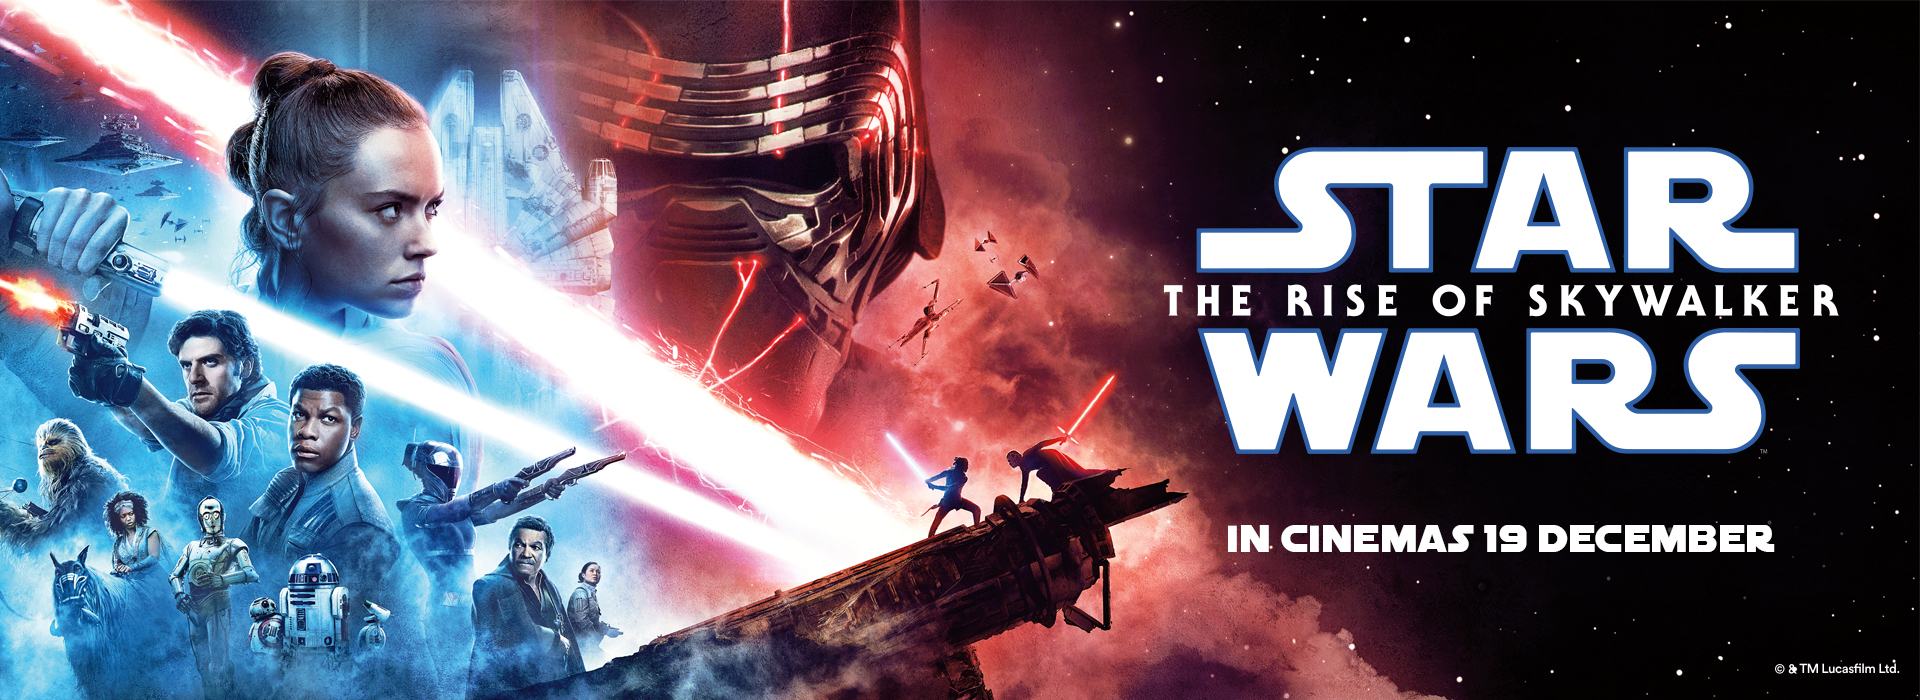 Win 2 tickets to STAR WARS: The Rise of Skywalker. In Cinemas December 19.